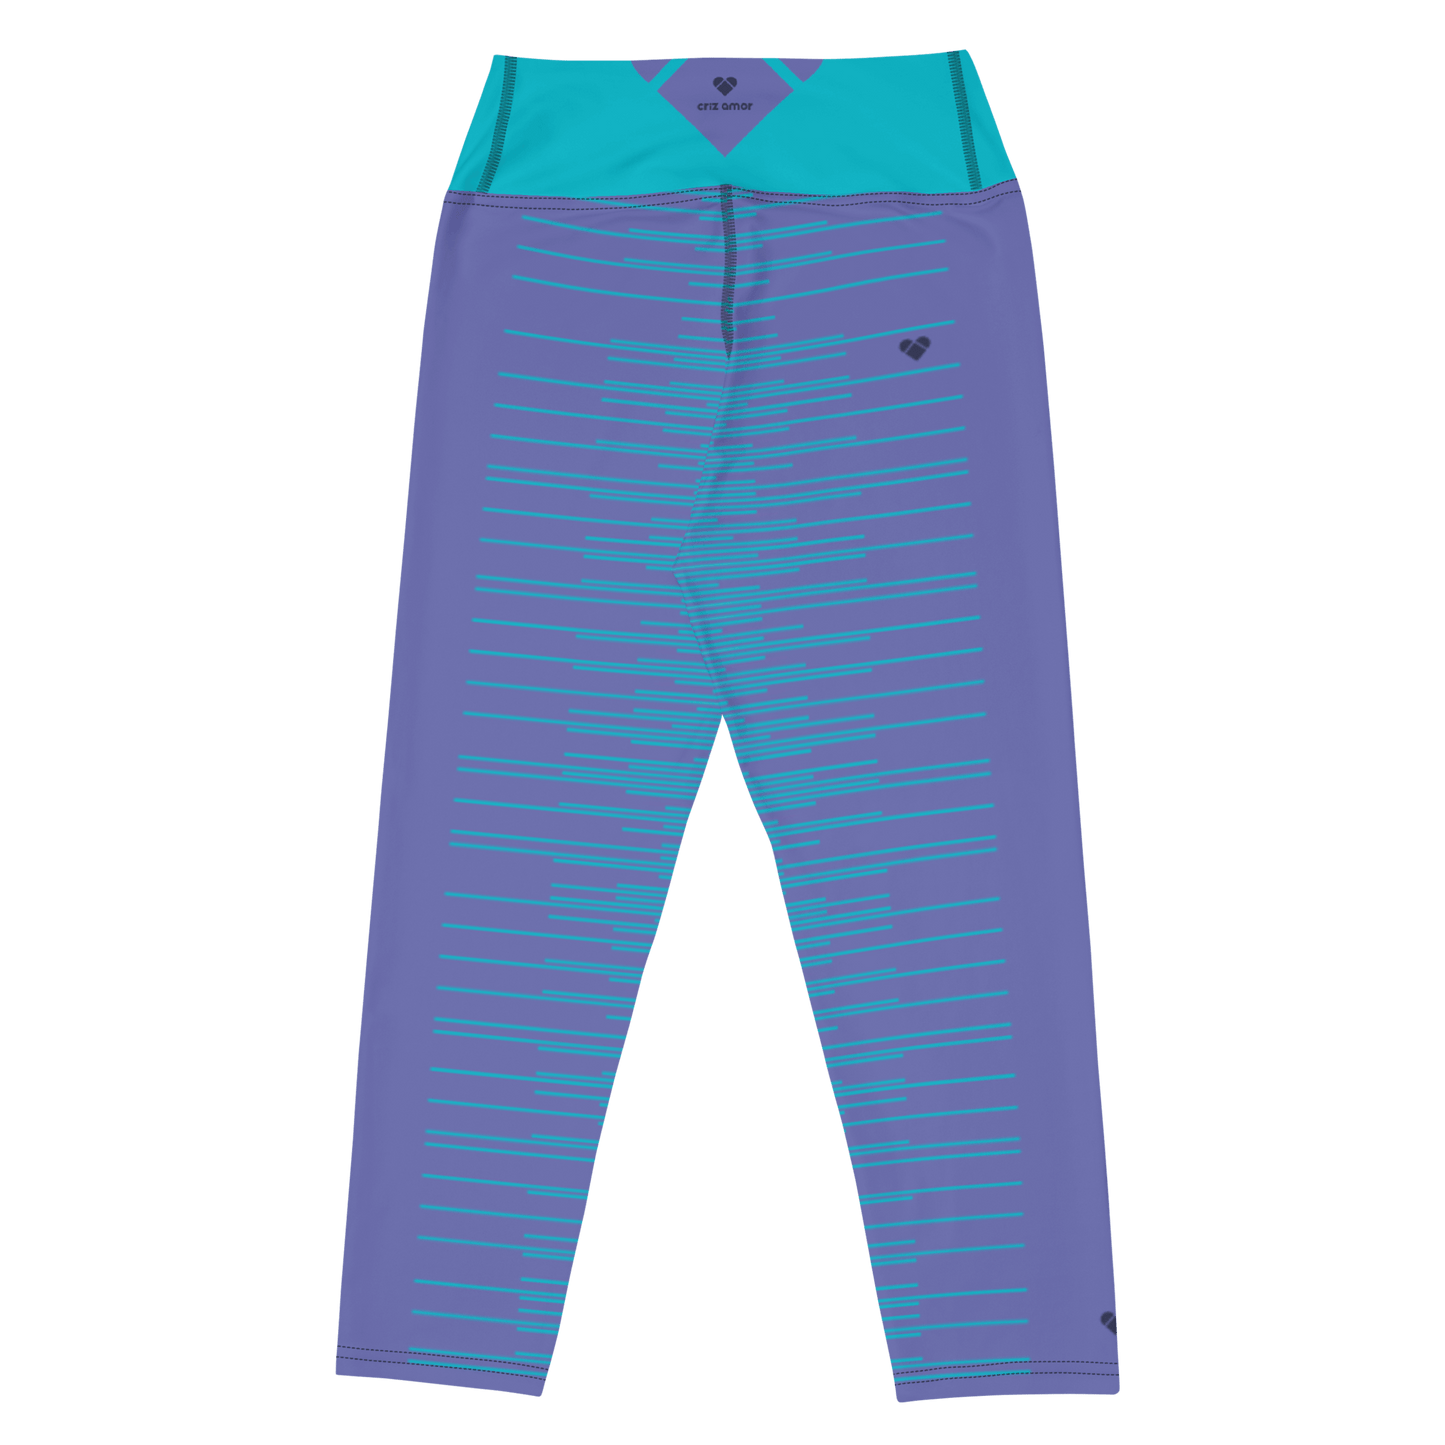 Periwinkle Dual Yoga Capri Leggings - A mesmerizing blend of periwinkle and turquoise stripes